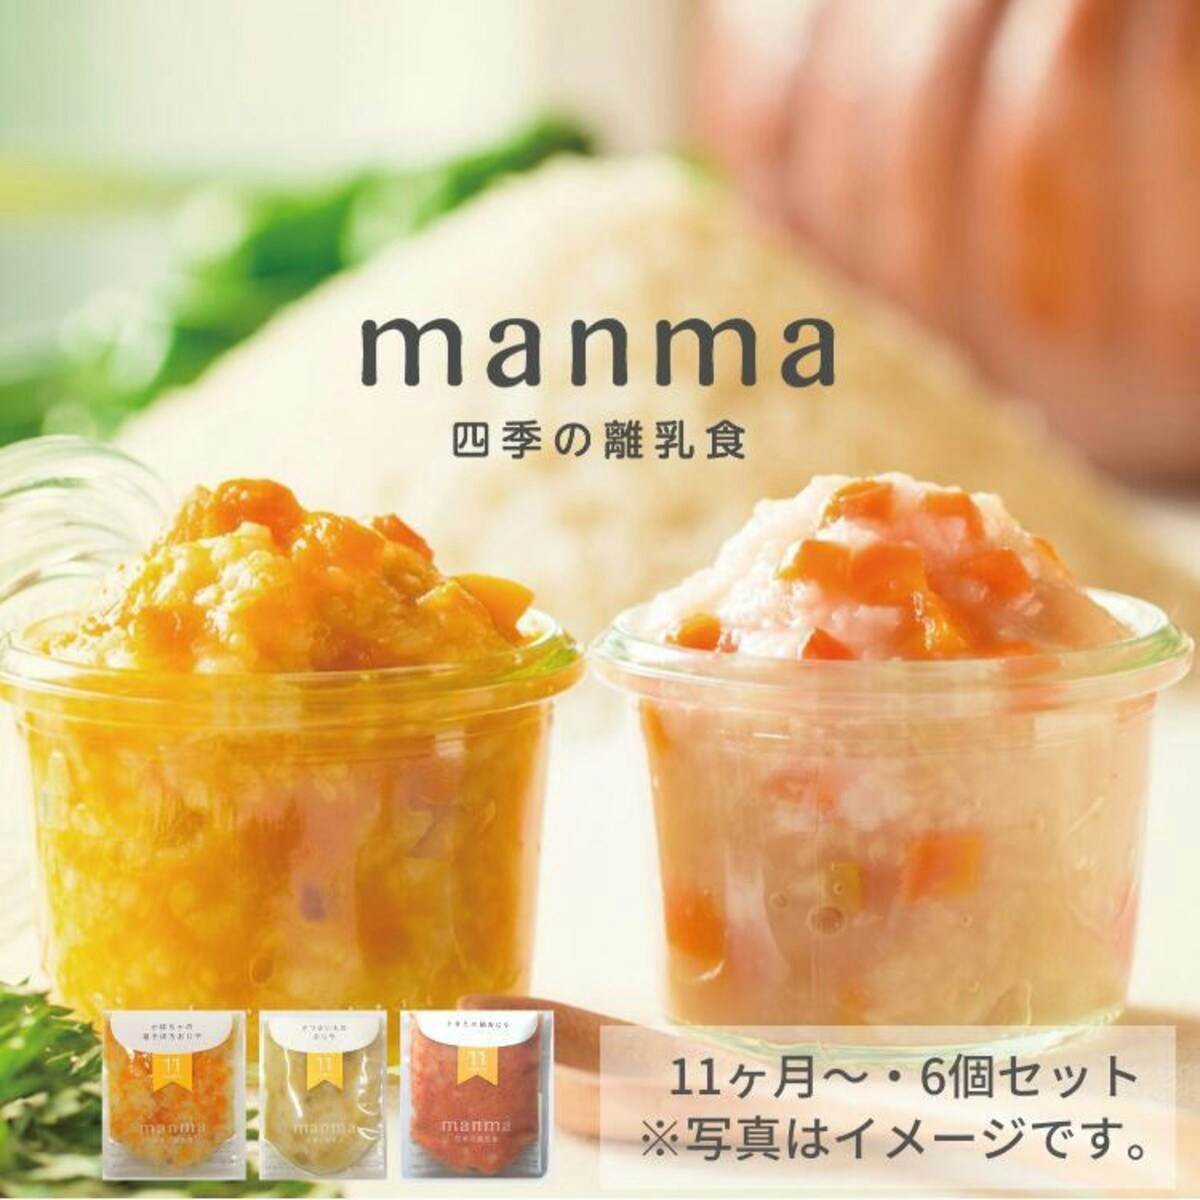  manma 「四季の離乳食 」11か月×6個セット